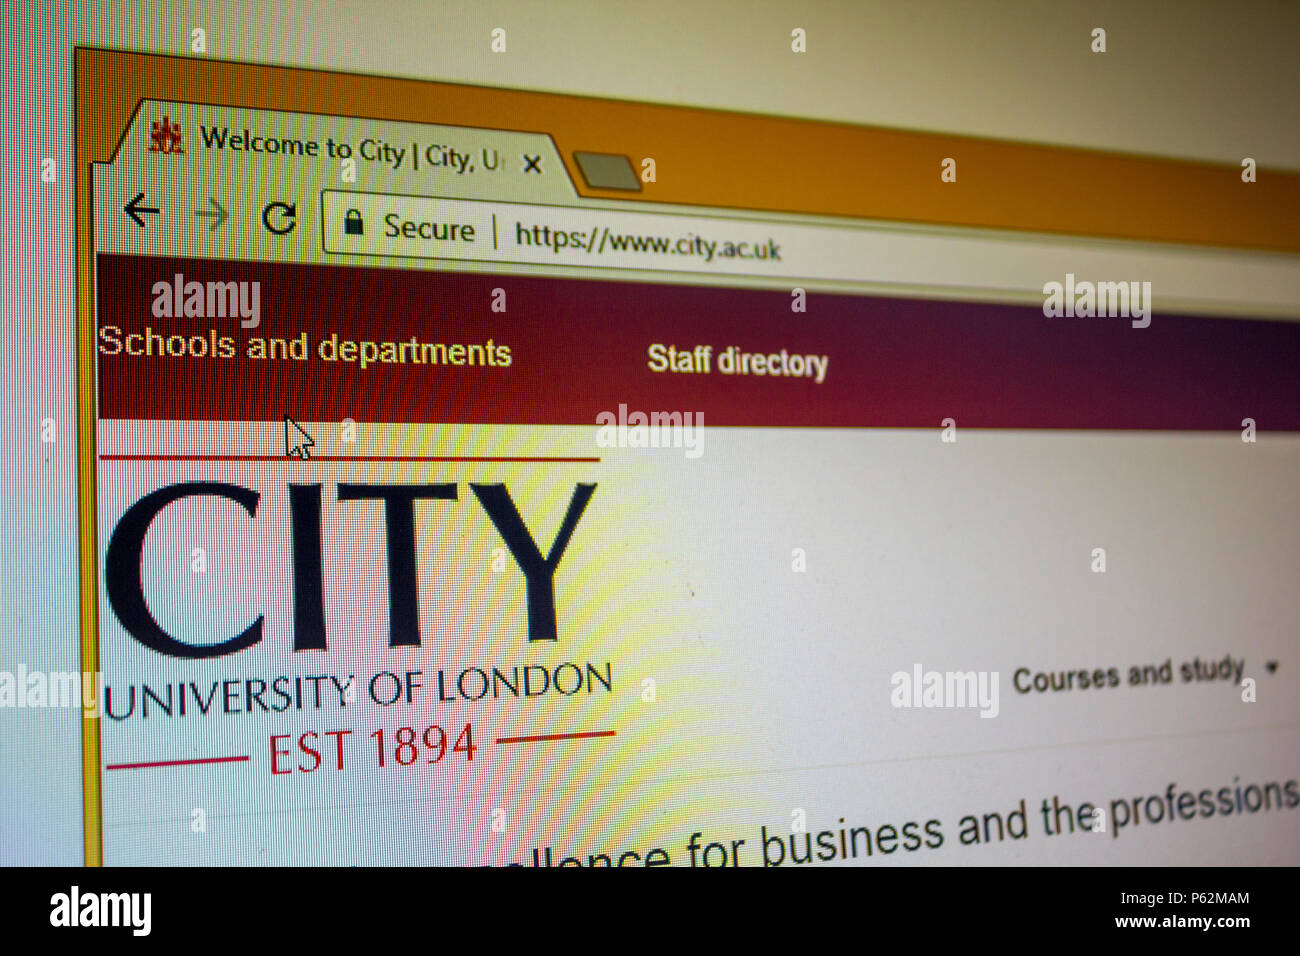 Website - City University of London Stock Photo